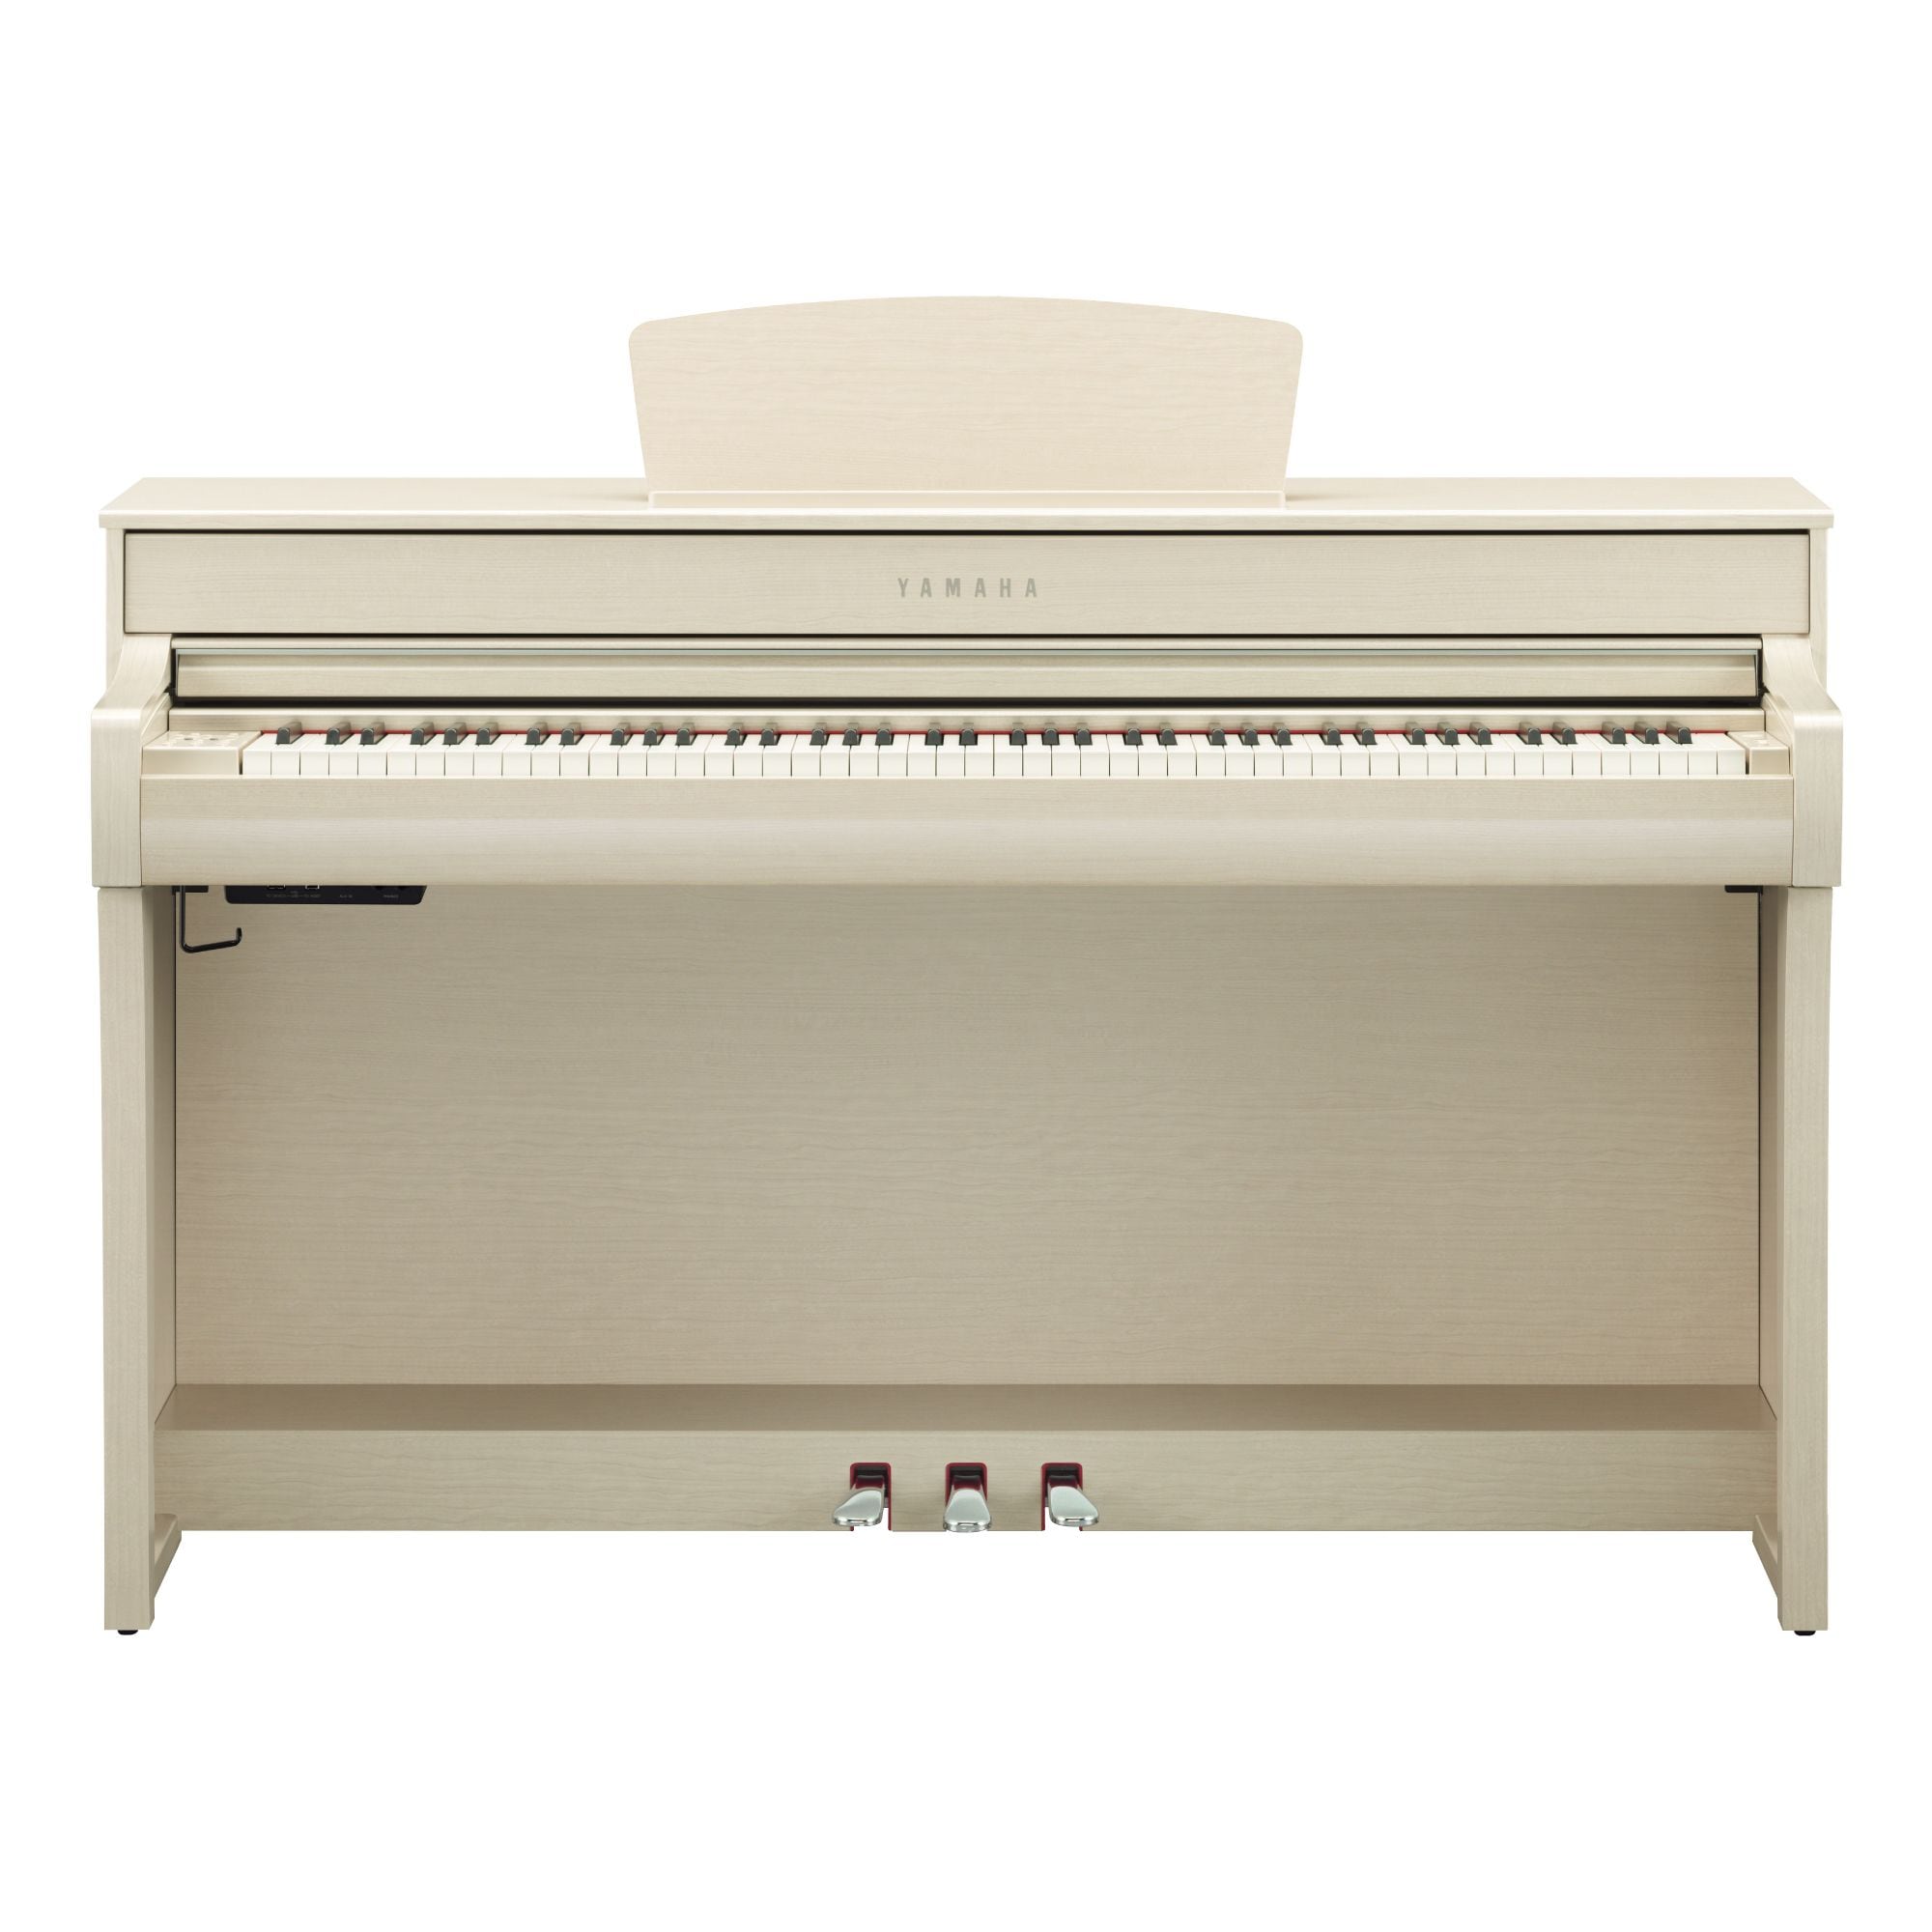 CLP-735 - Overview - Clavinova - Pianos - Musical Instruments 